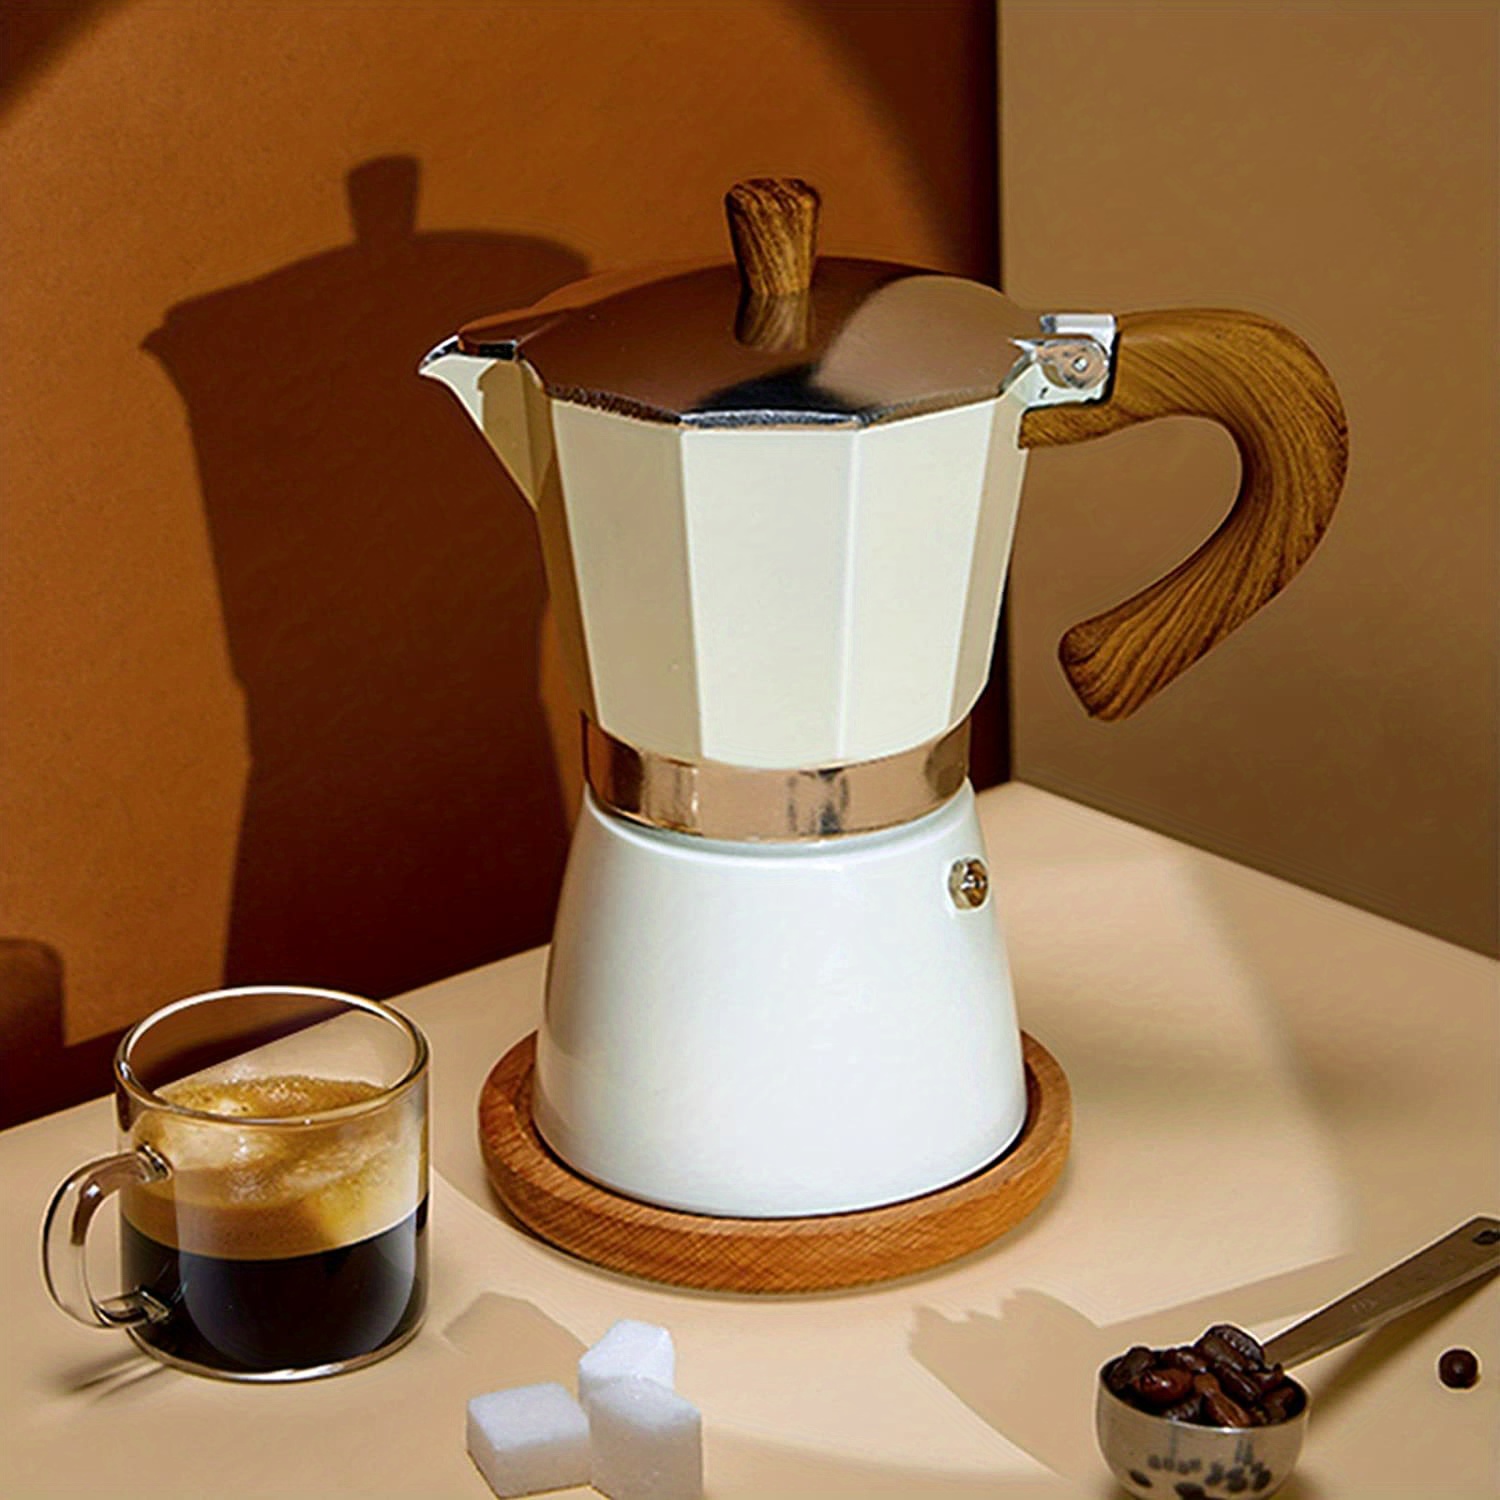  Cafetera espresso para estufa, cafetera 4 tazas, cafetera  italiana Moka Pot de acero inoxidable, cafetera italiana para capuchino o  café con leche, regalos (4 tazas de 6.8 fl oz) : Hogar y Cocina